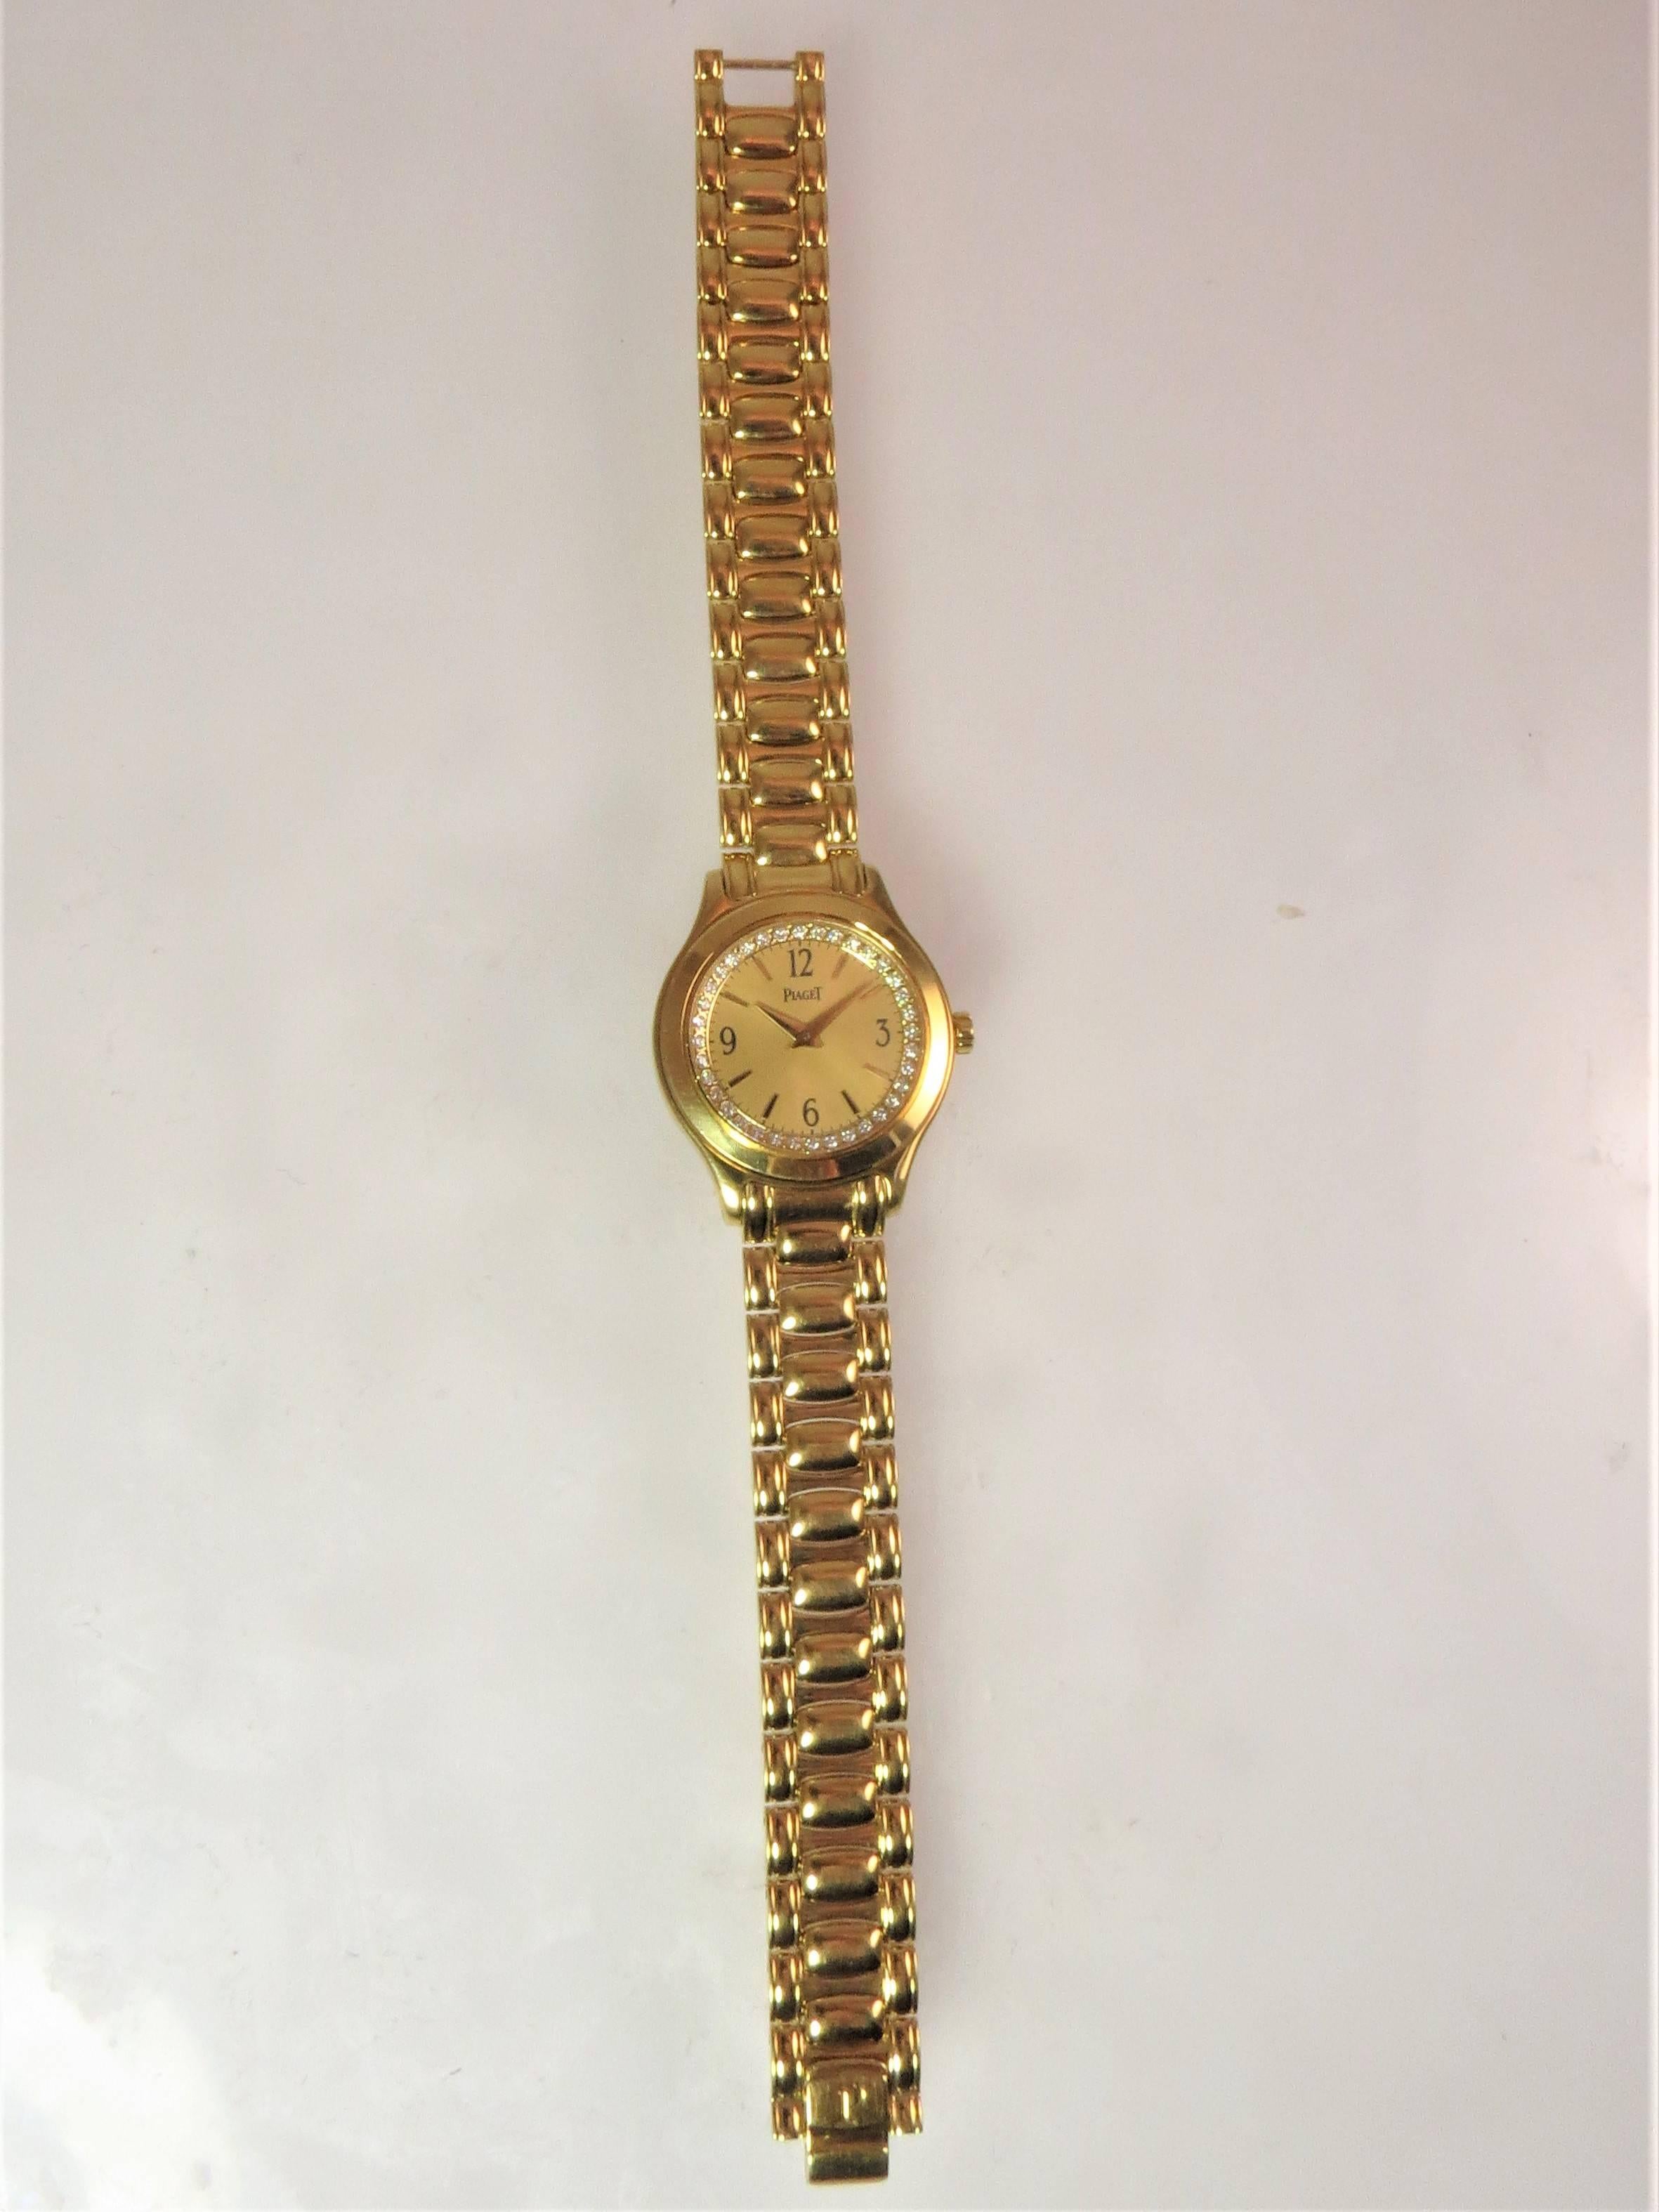 Brand new, never worn, 18K yellow gold Piaget Citea bracelet watch, diamond bezel, gilt dial, quartz movement, case size 25mm, serial #654111, model 01GOAO1-21162

2 year warranty. Piaget box